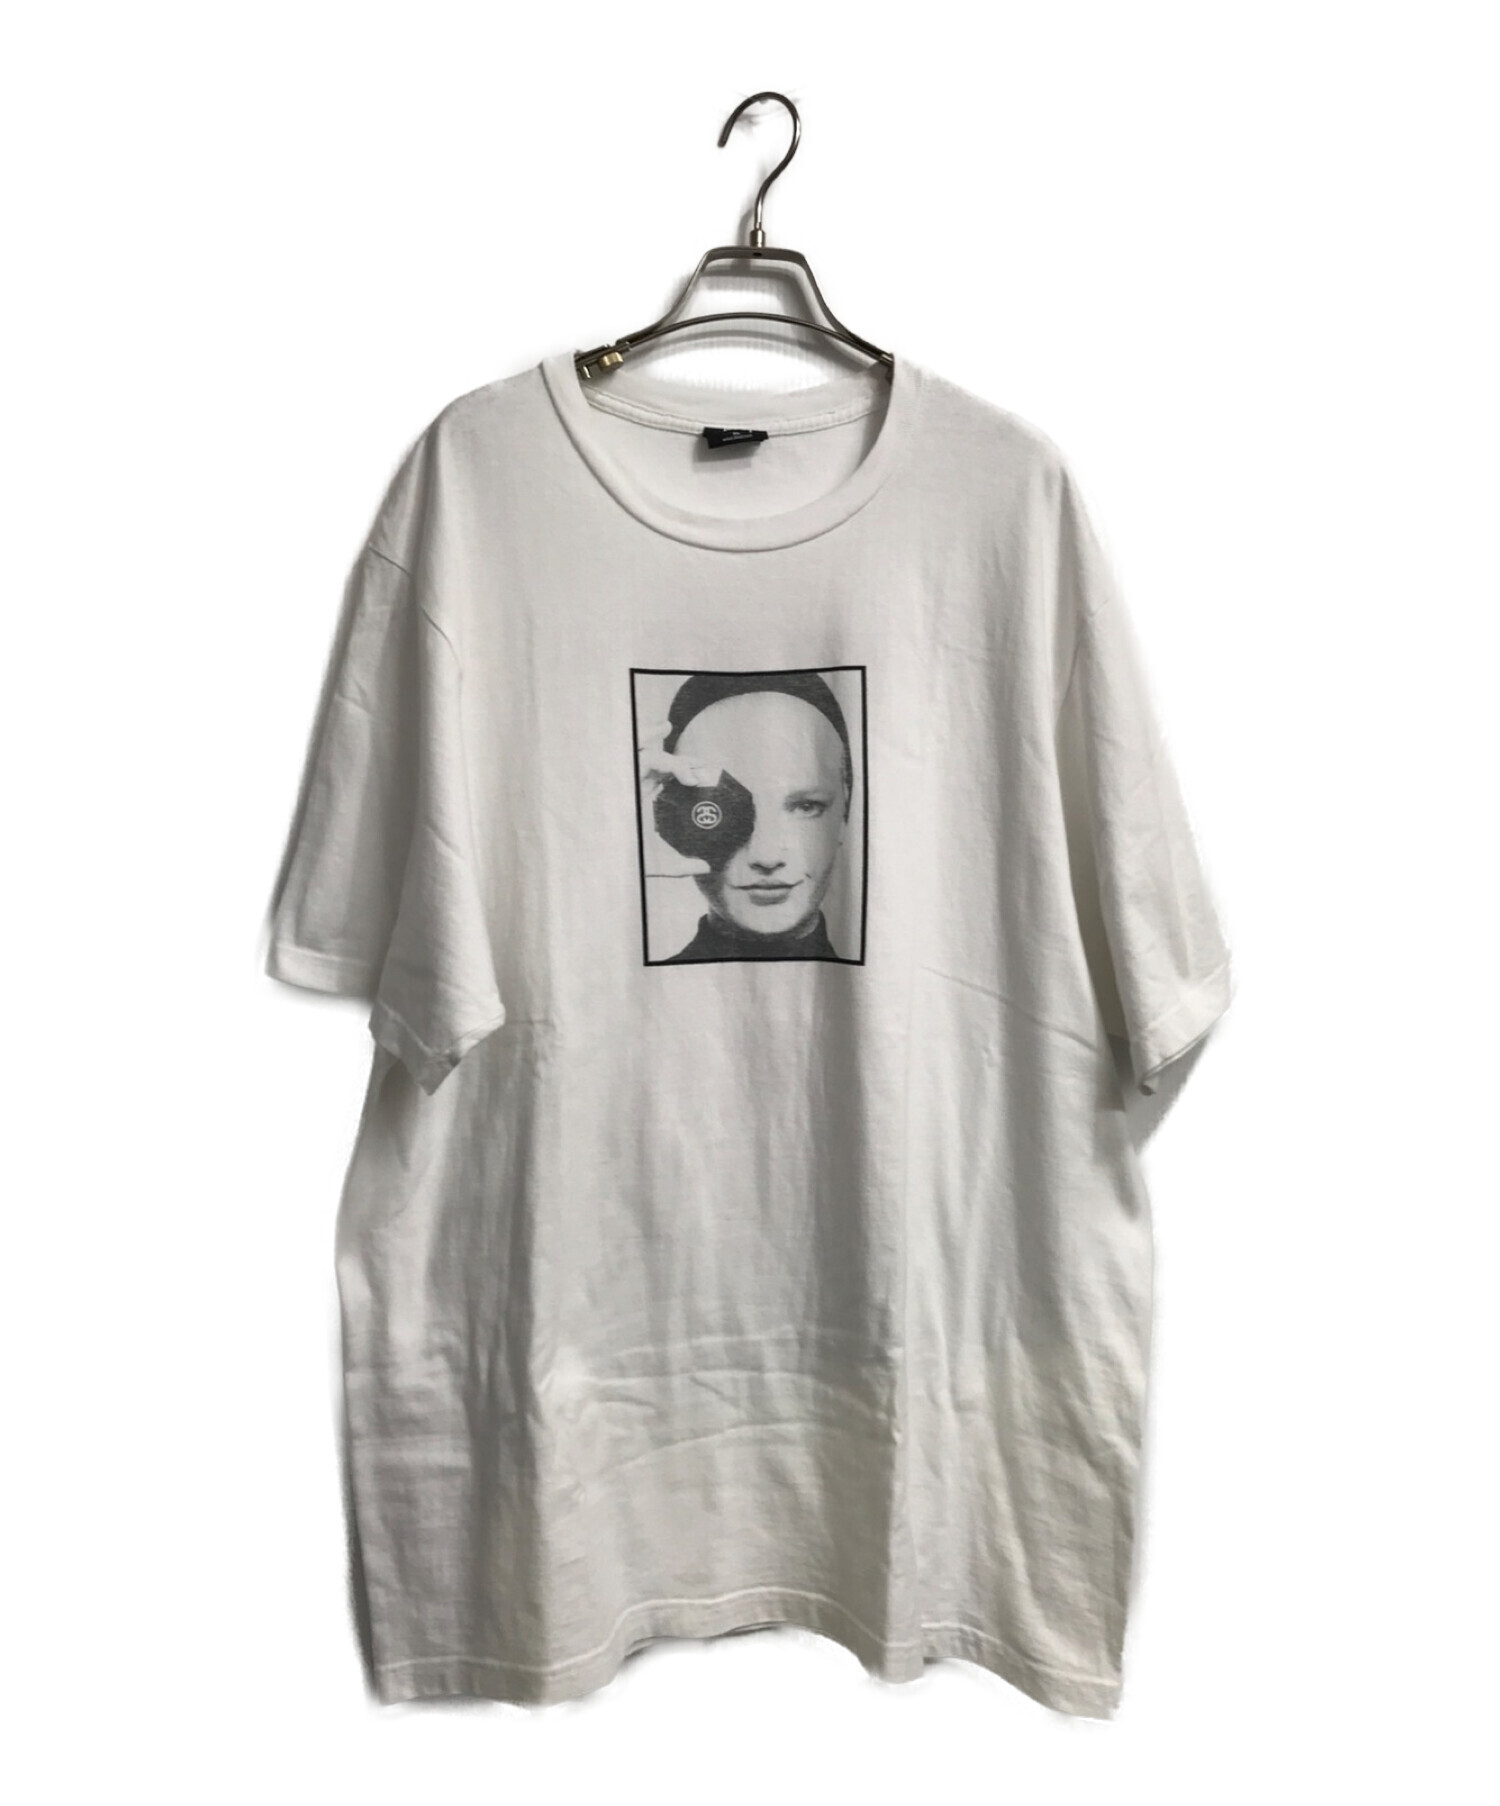 ★ Mサイズ★STUSSY CHANEL T-shirt white